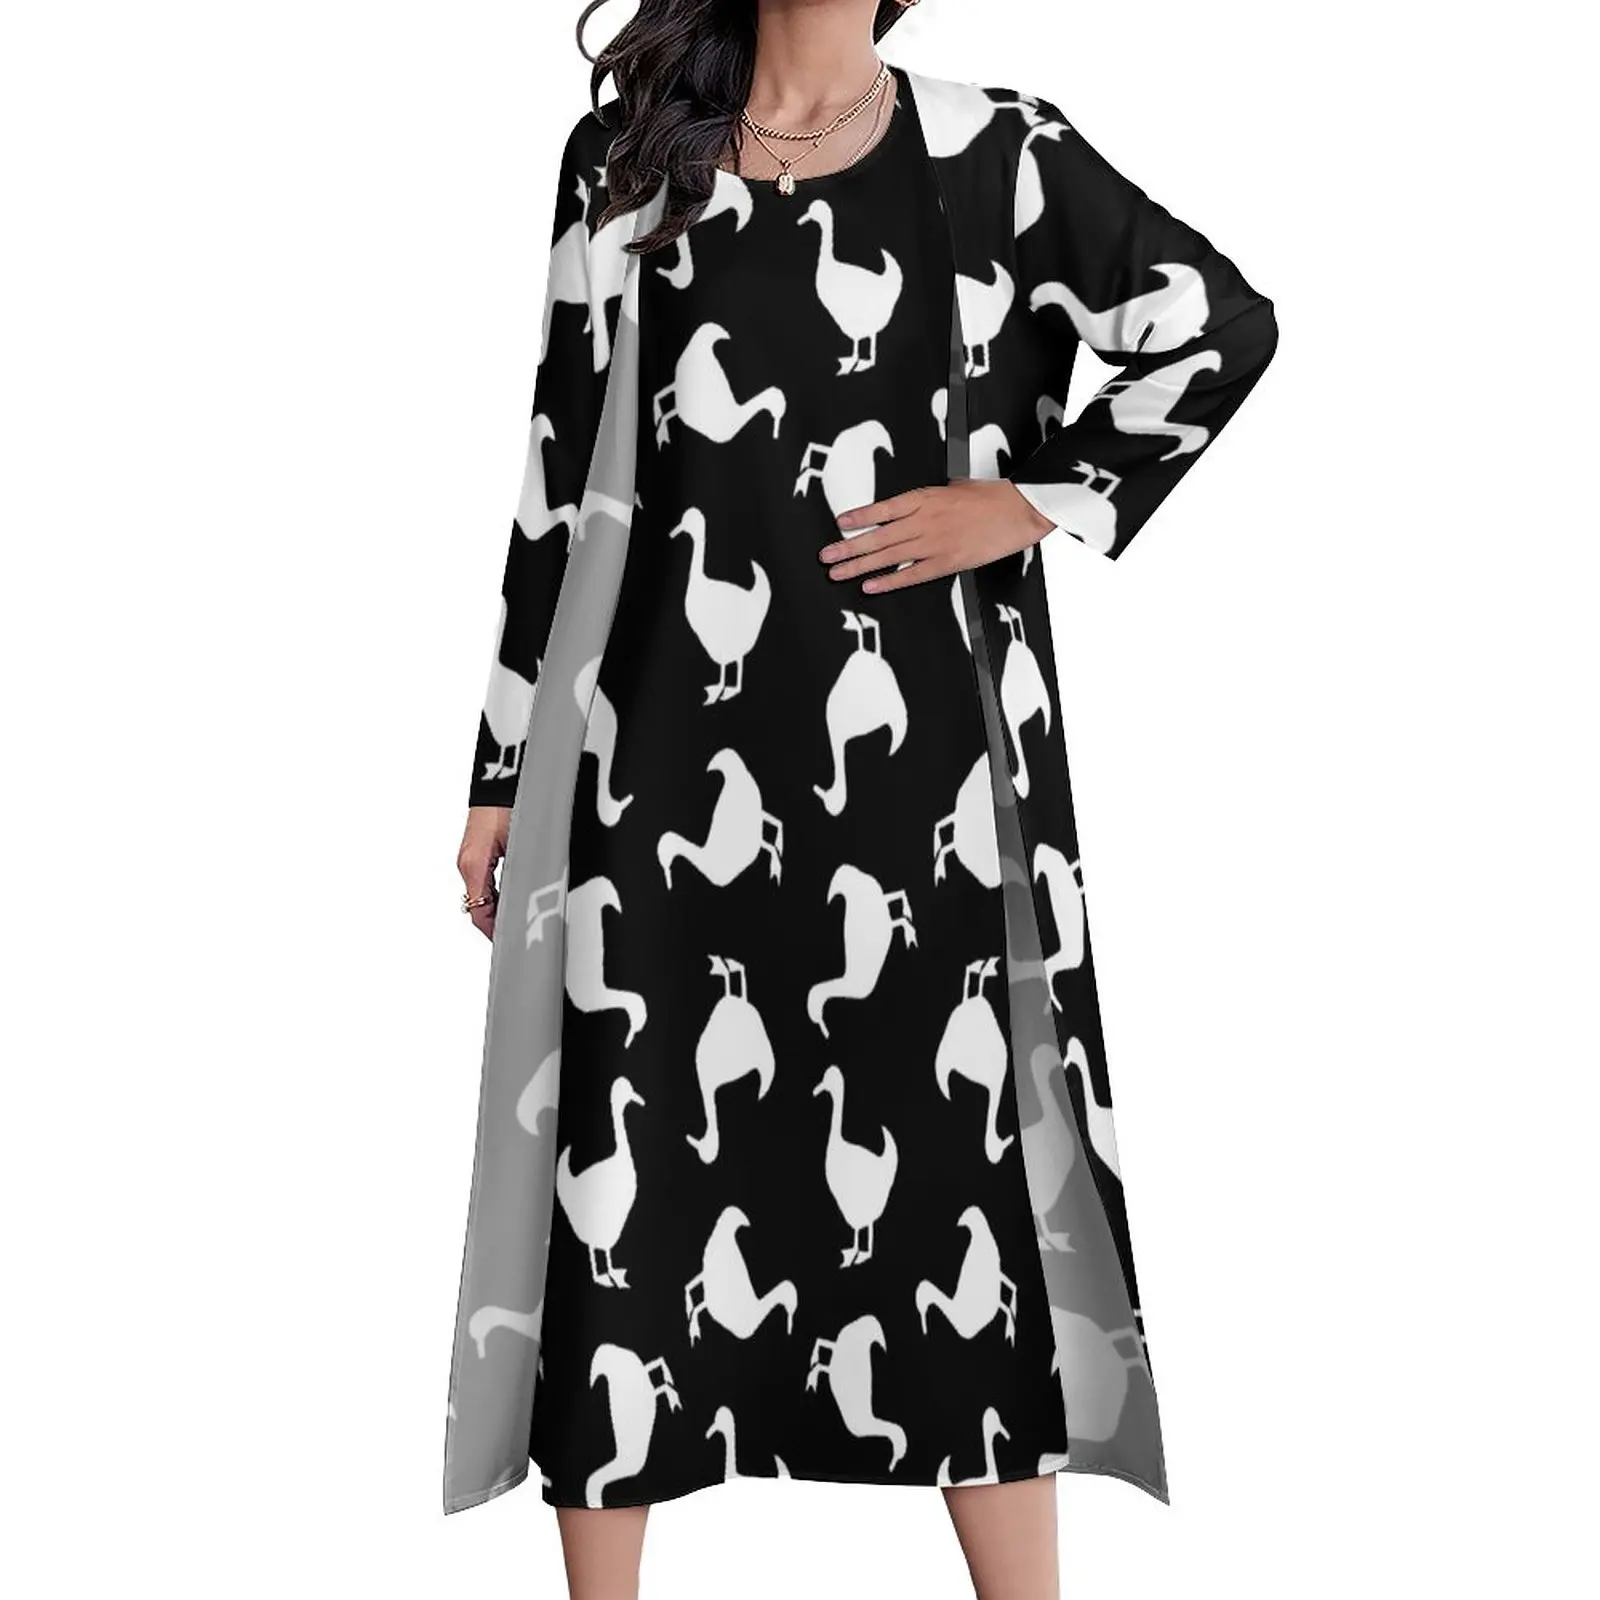 

Animal Silhouette Dress Summer Black And White Duck Street Style Casual Long Dresses Women Graphic Beach Maxi Dress 3XL 4XL 5XL